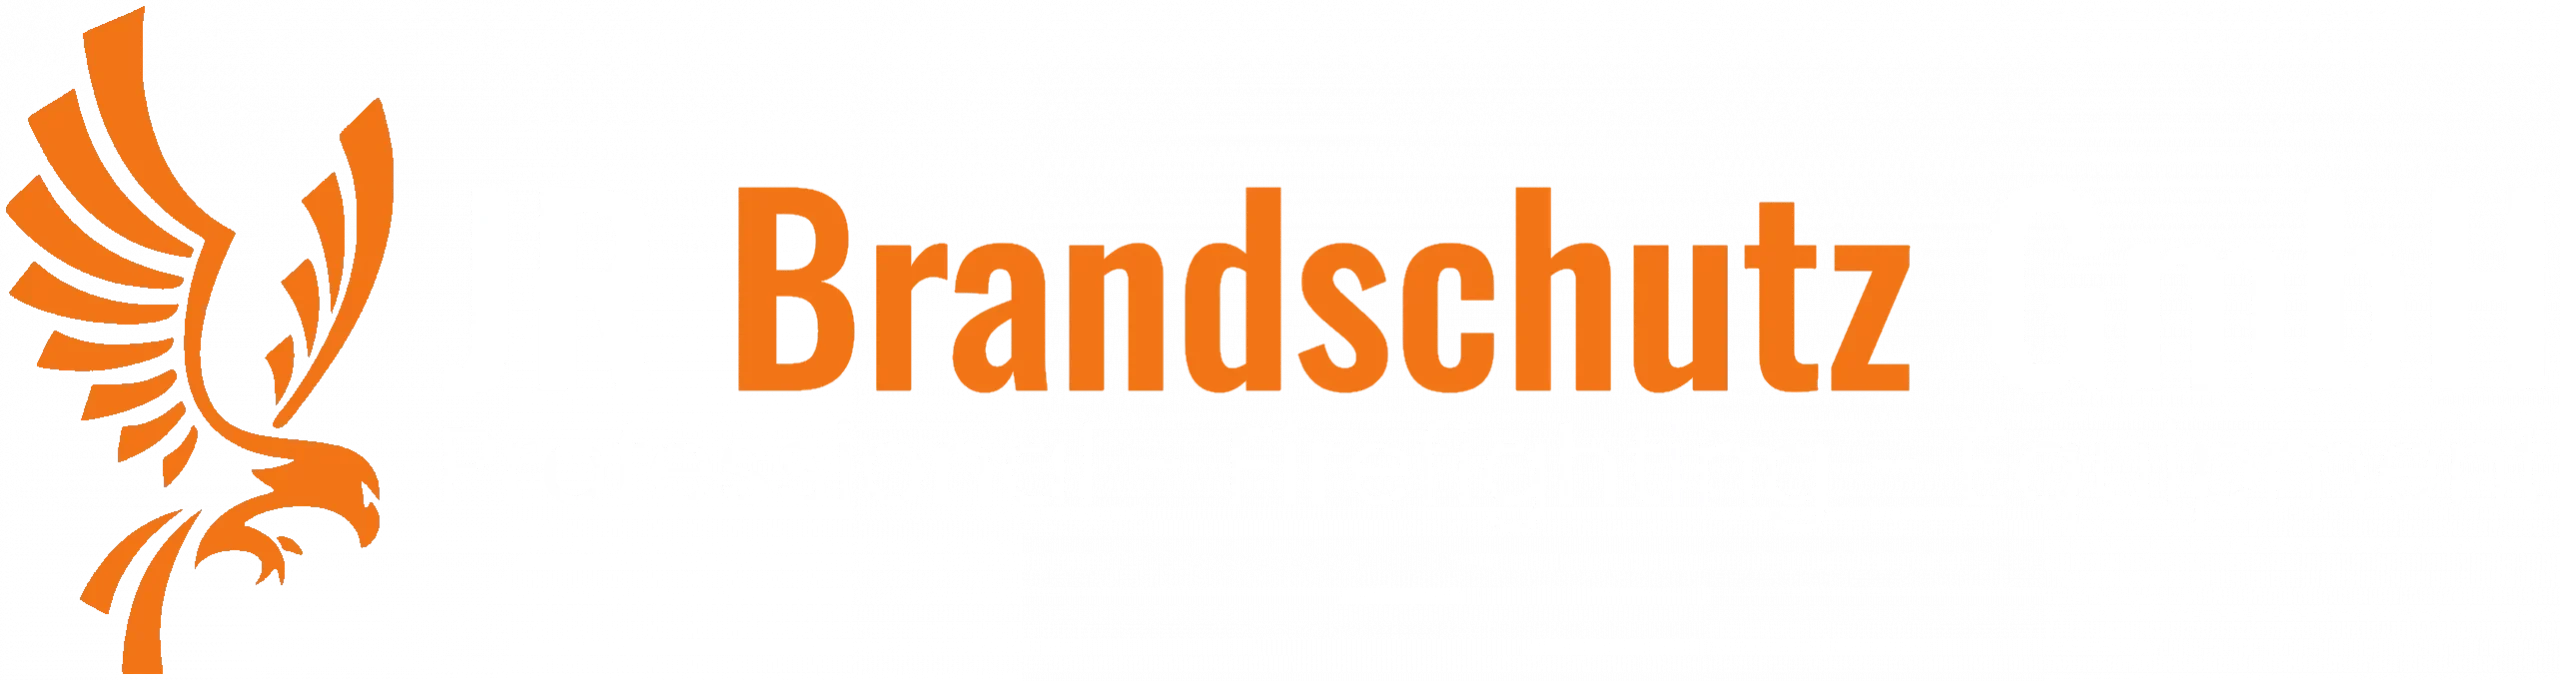 JR Brandschutz GmbH